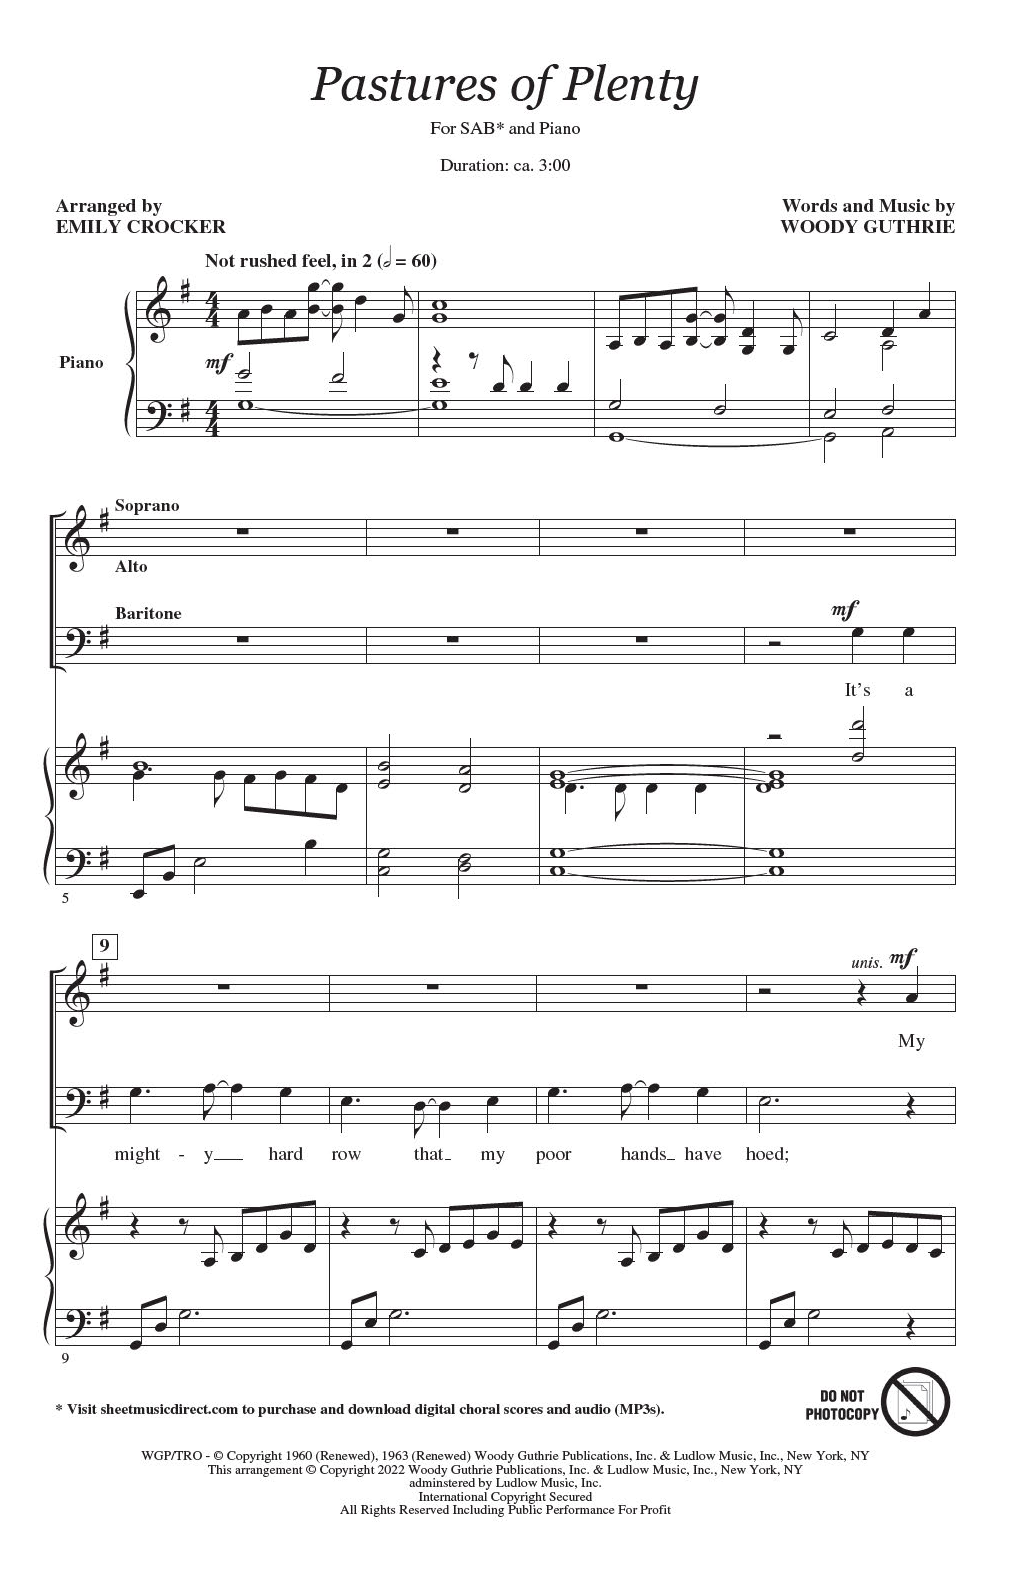 Woody Guthrie Pastures Of Plenty (arr. Emily Crocker) Sheet Music Notes & Chords for SAB Choir - Download or Print PDF